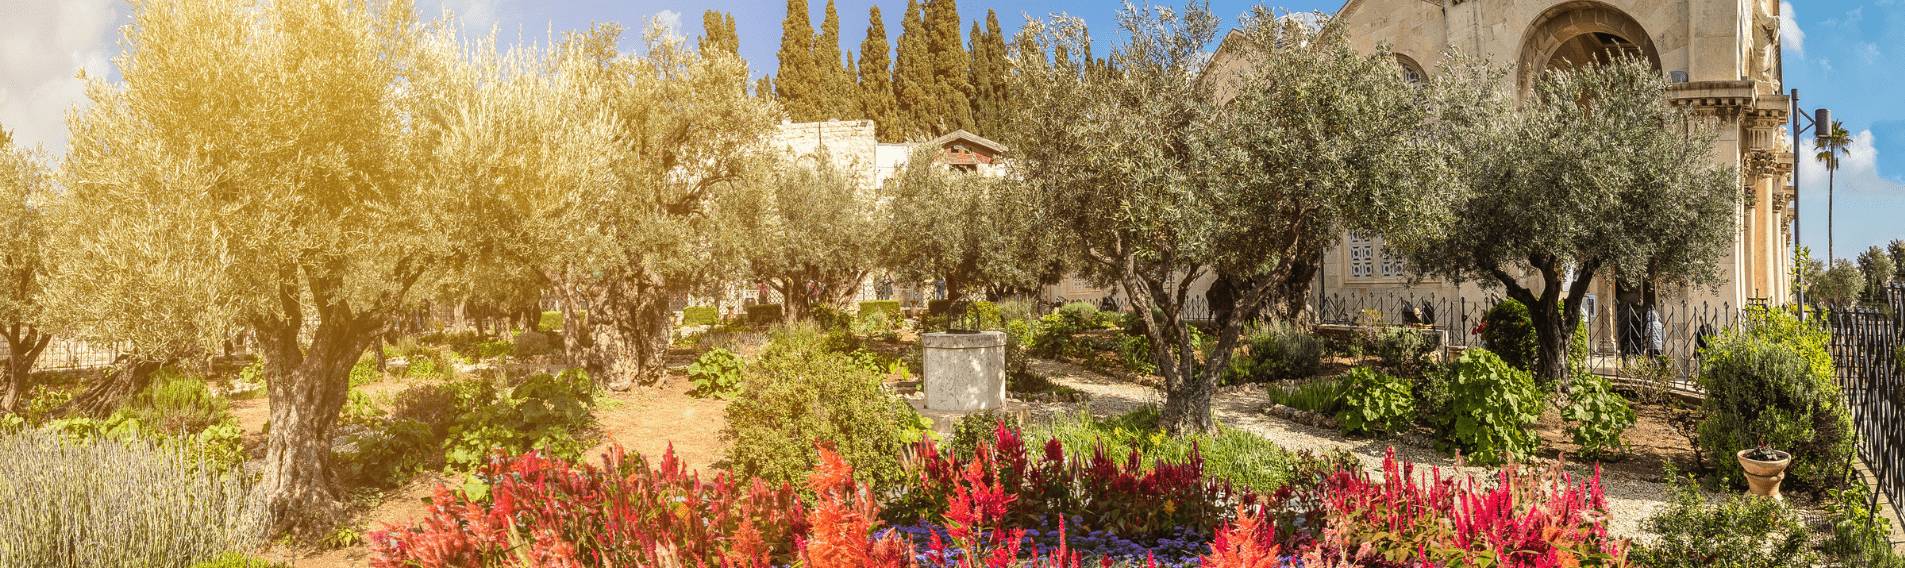 Visita ao Jardim do Getsêmani